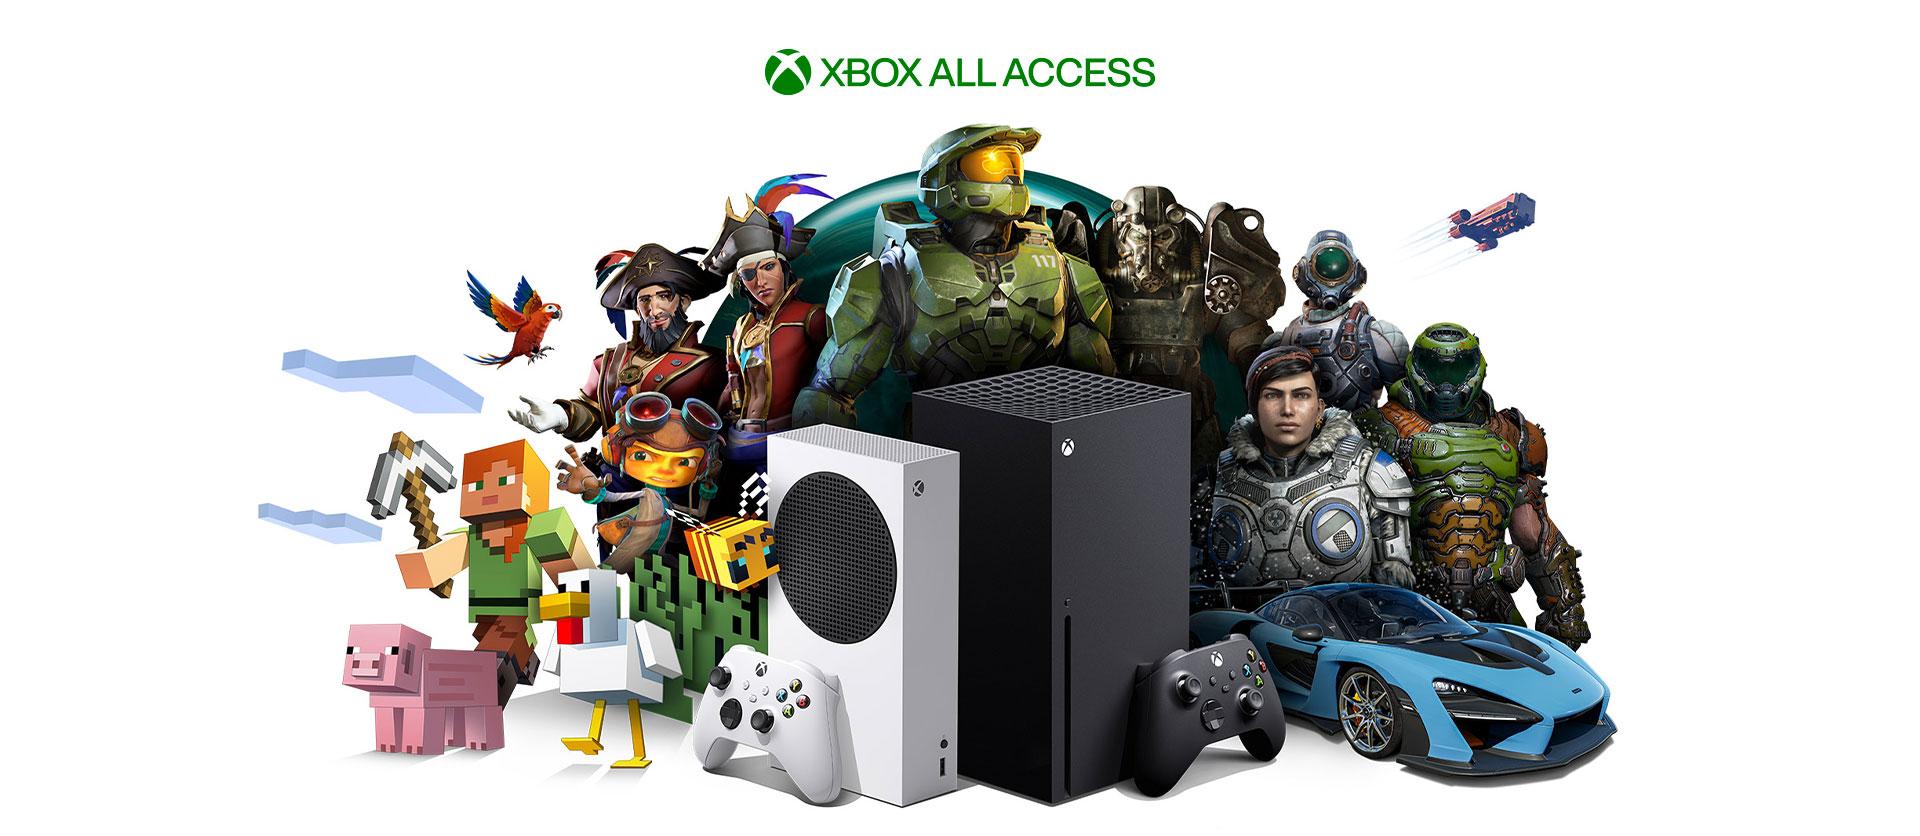 Xbox-lekkasje indikerer at hele familien snart kan dele Game Pass-konto